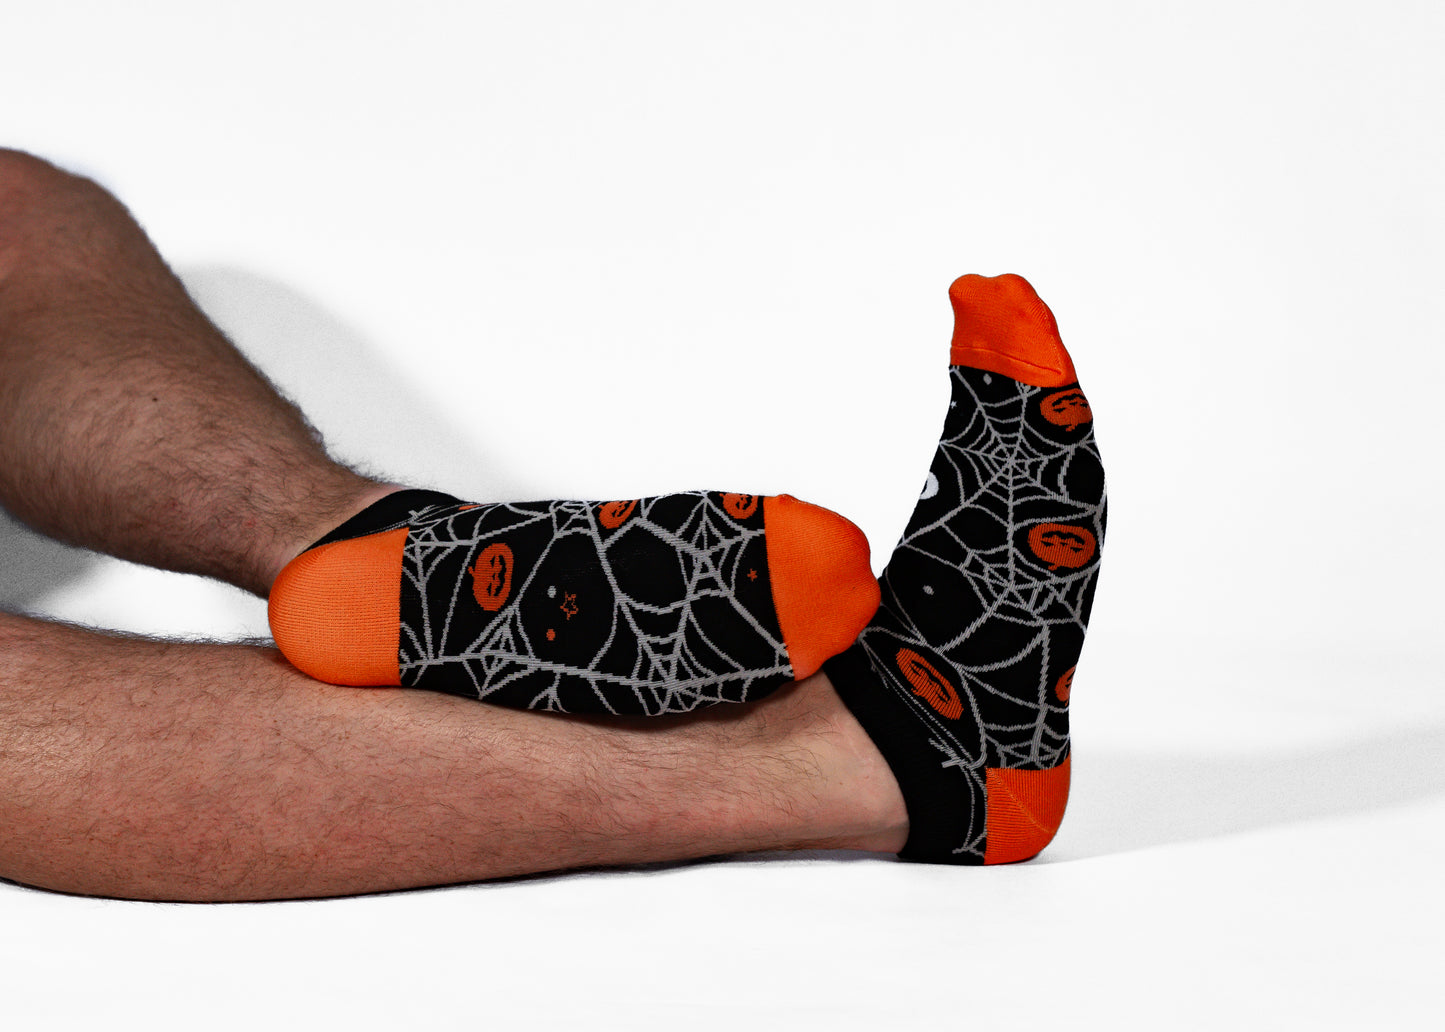 Halloween Ankle Socks